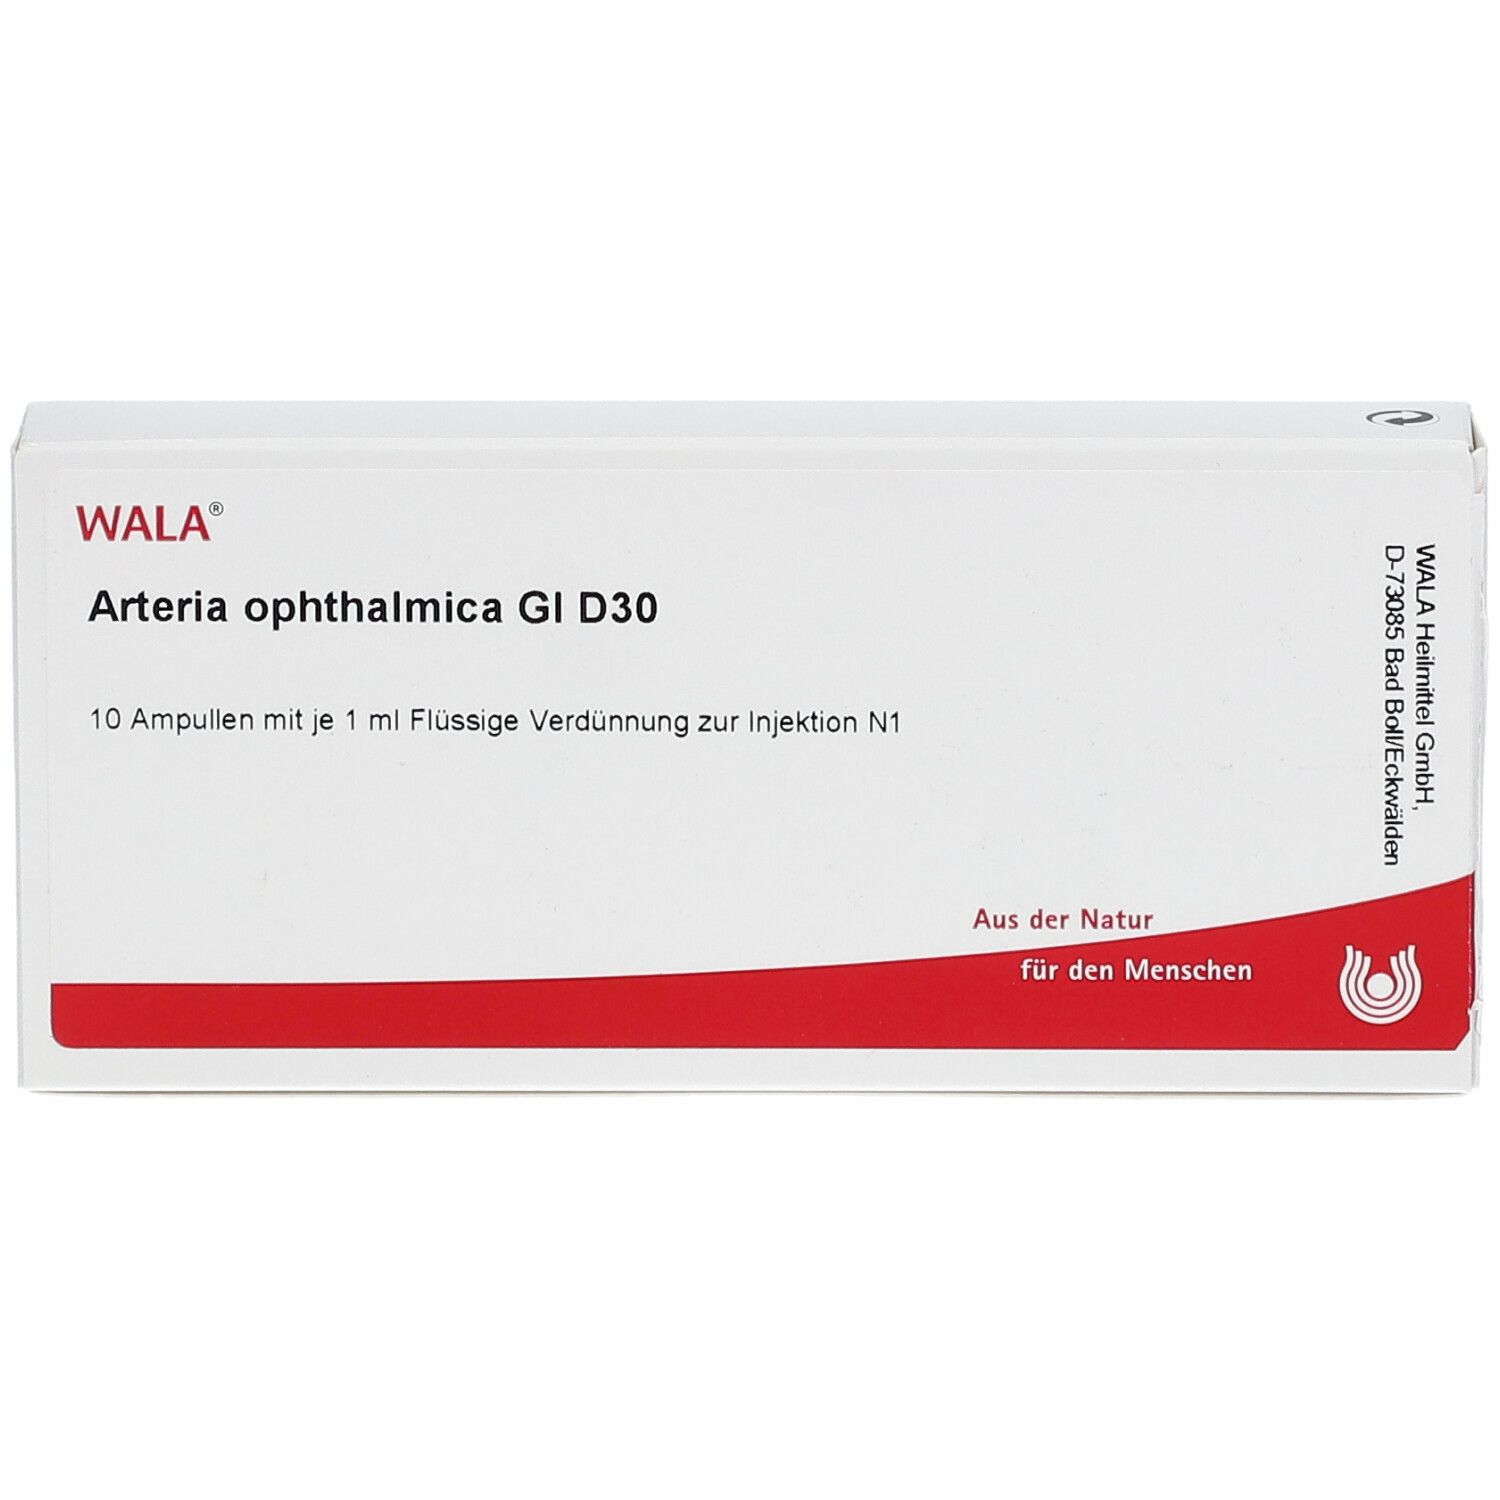 WALA® Arteria ophthalmica Gi D 30